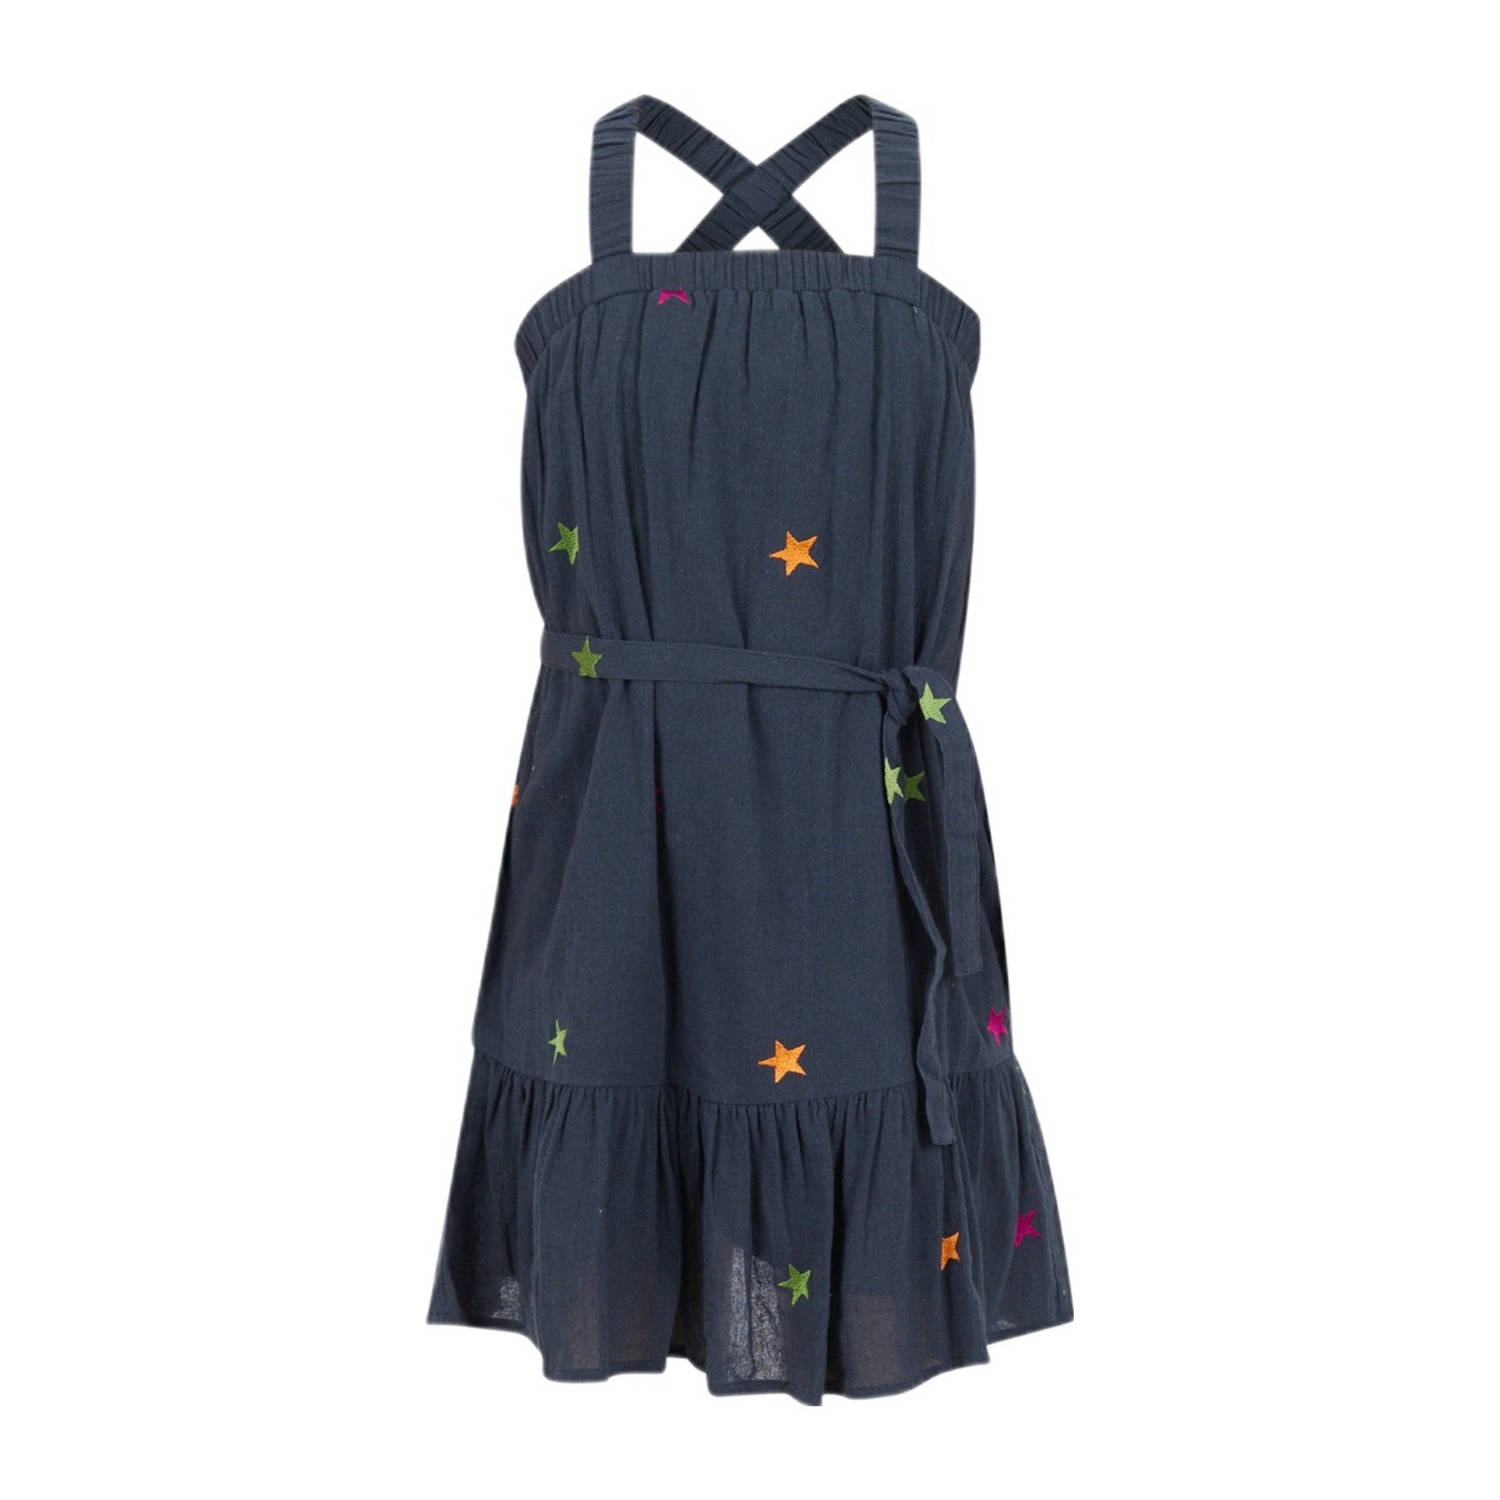 Shoeby jurk met sterren en borduursels donkergrijs